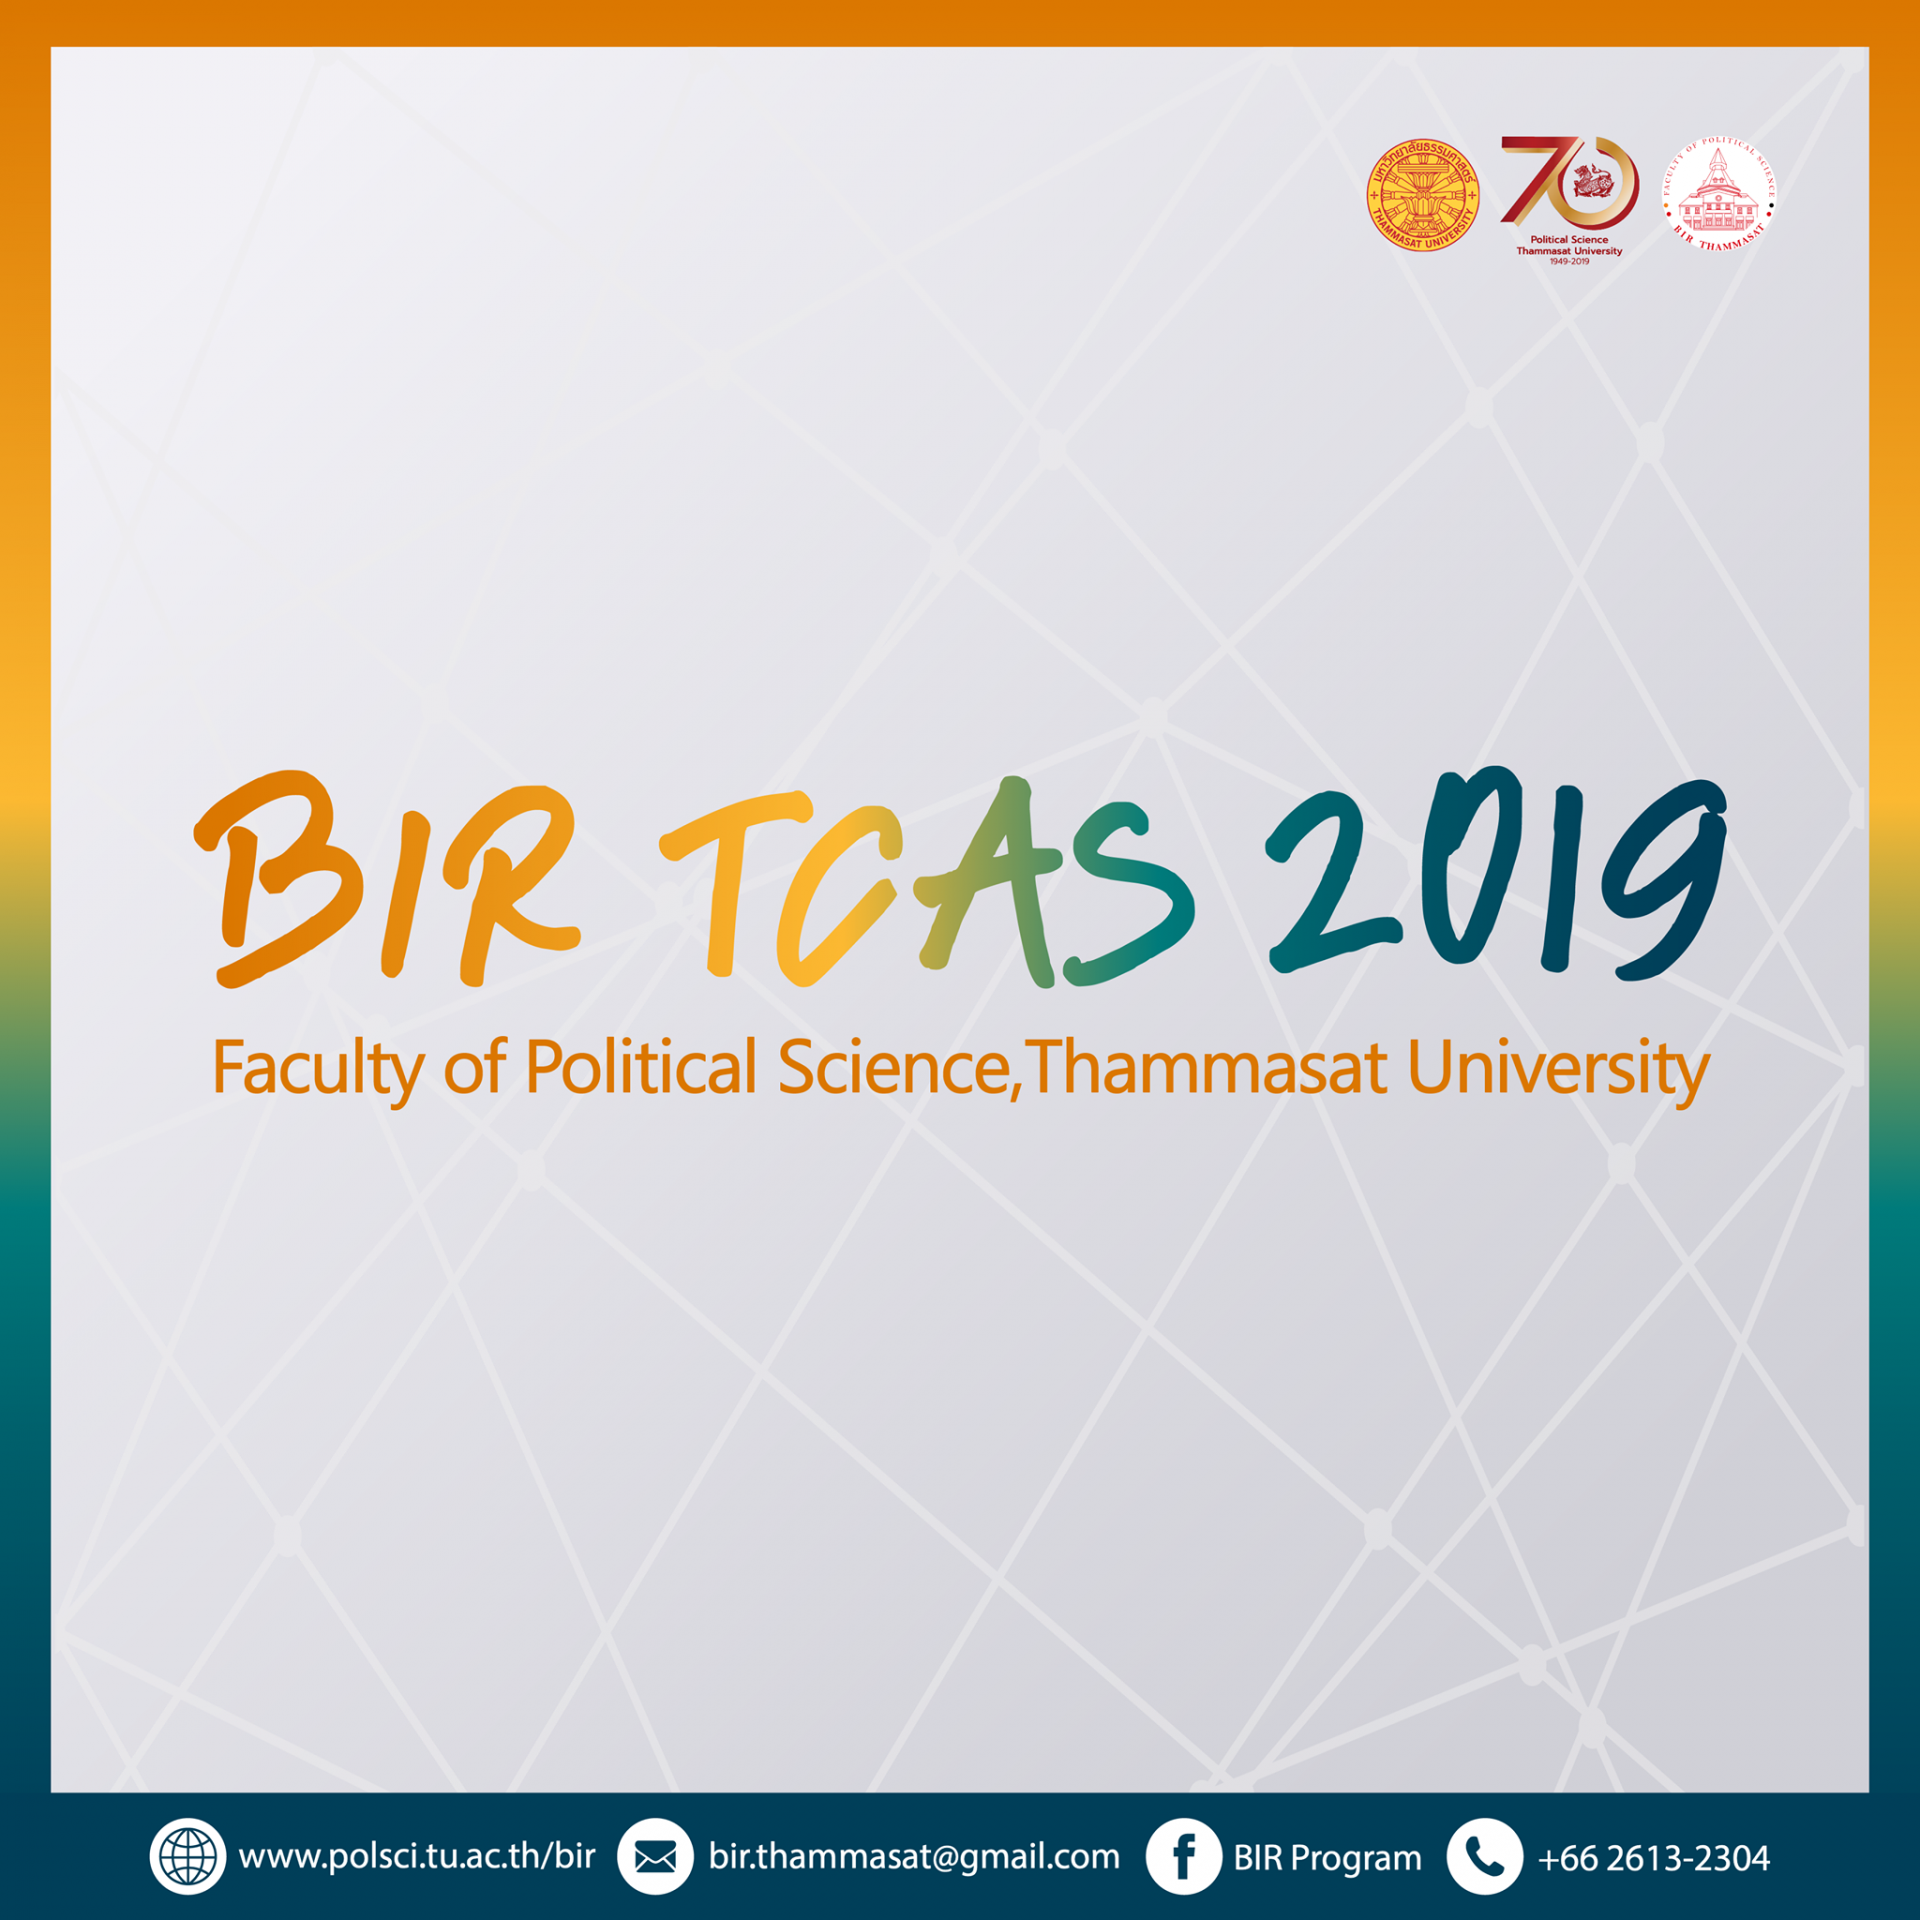 BIR TCAS 2019 update!